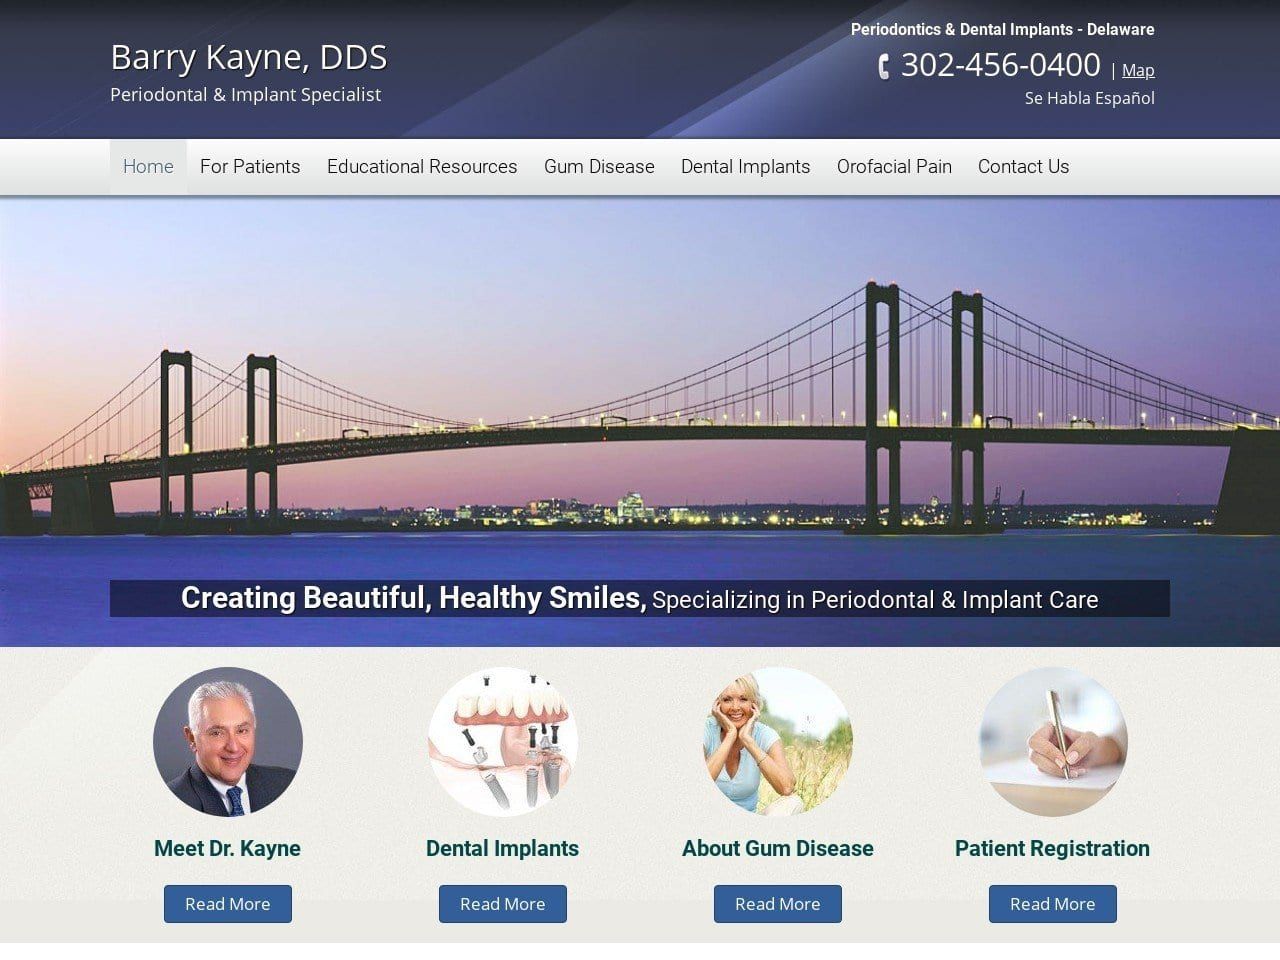 Barry S. Kayne DDS Website Screenshot from delawareperio.com